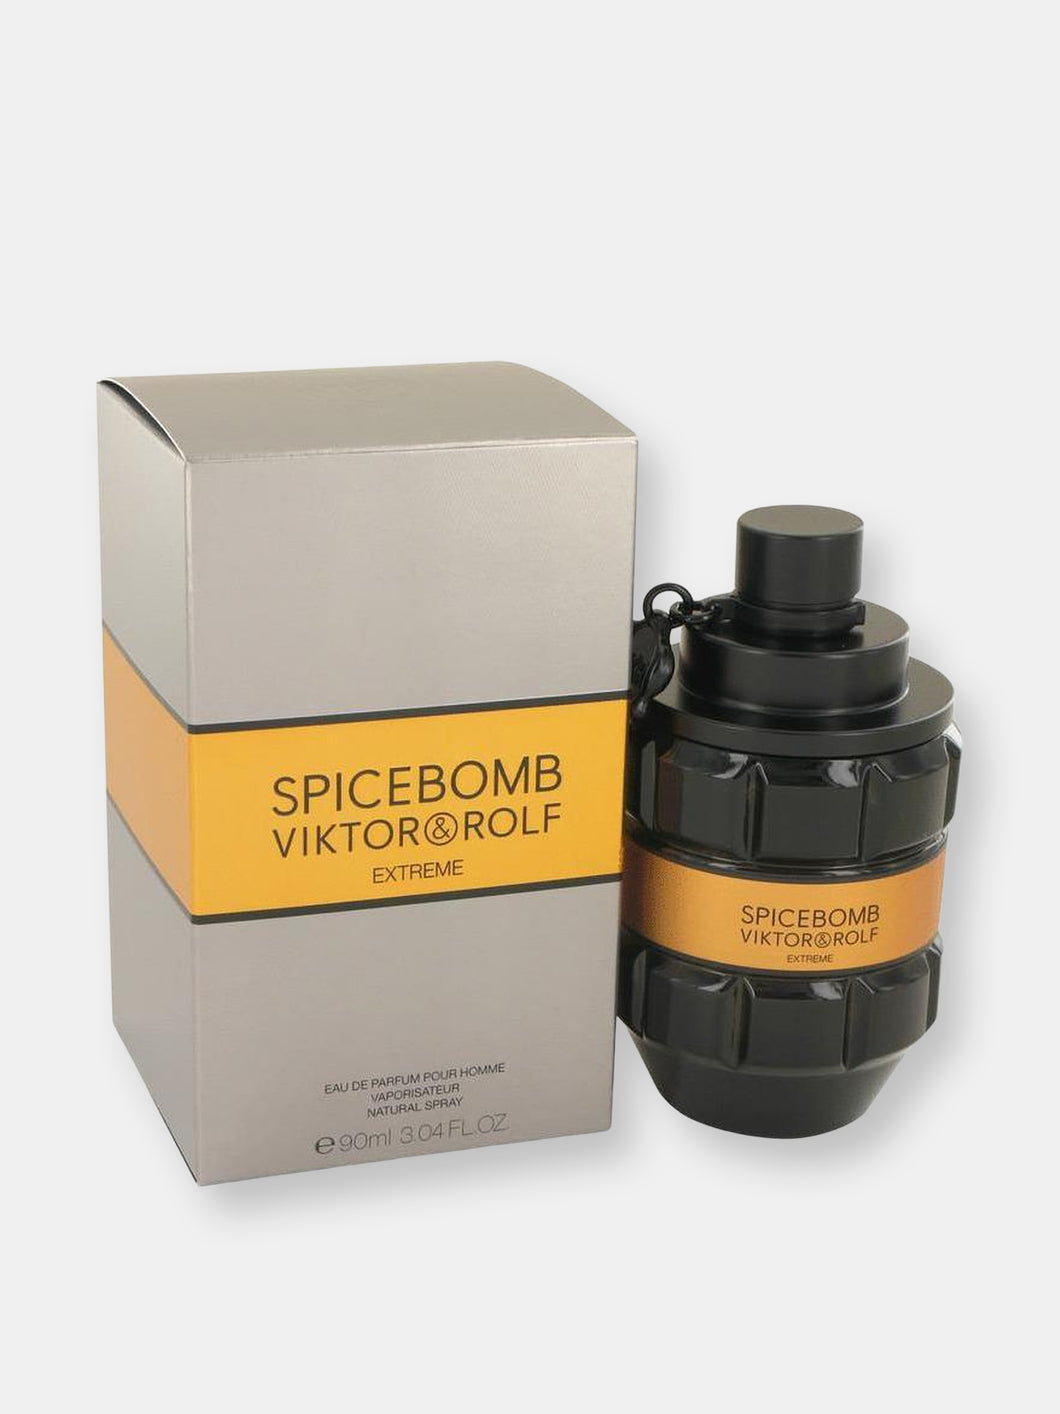 Spicebomb Extreme By Viktor And Rolf Eau De Parfum Spray 3.04 oz